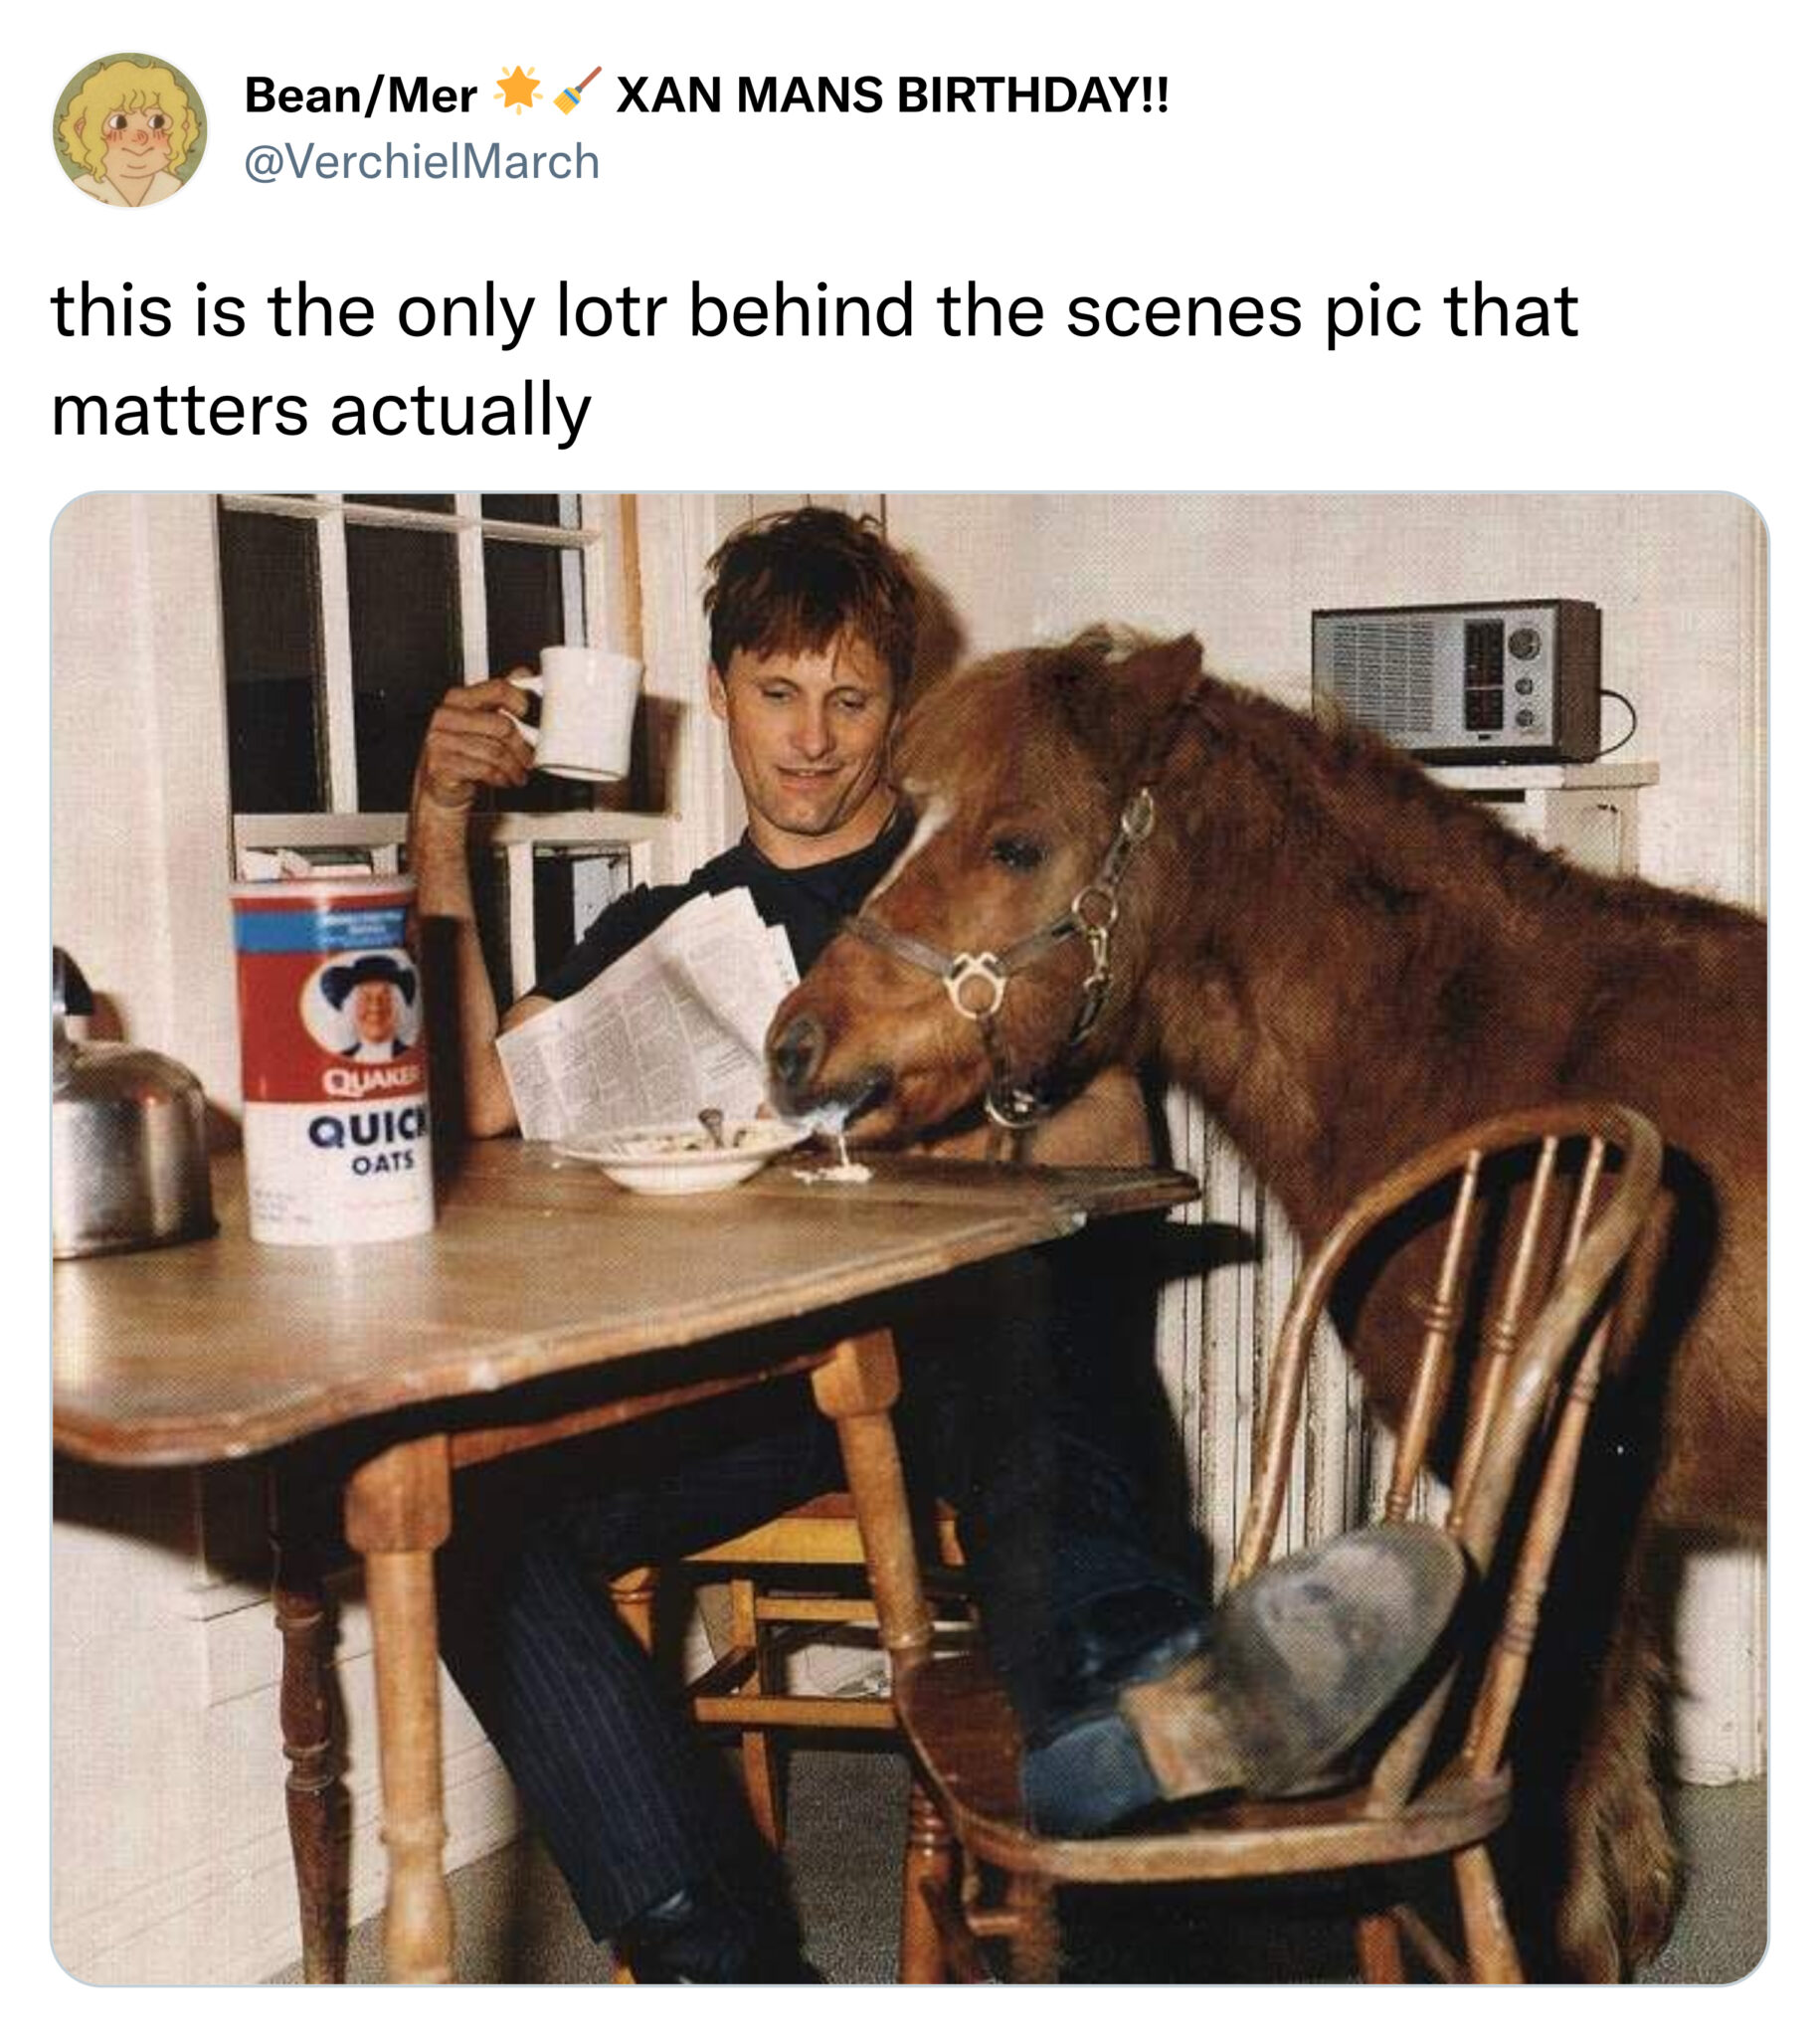 Image of viggo mortensen eating breakfast with a horse